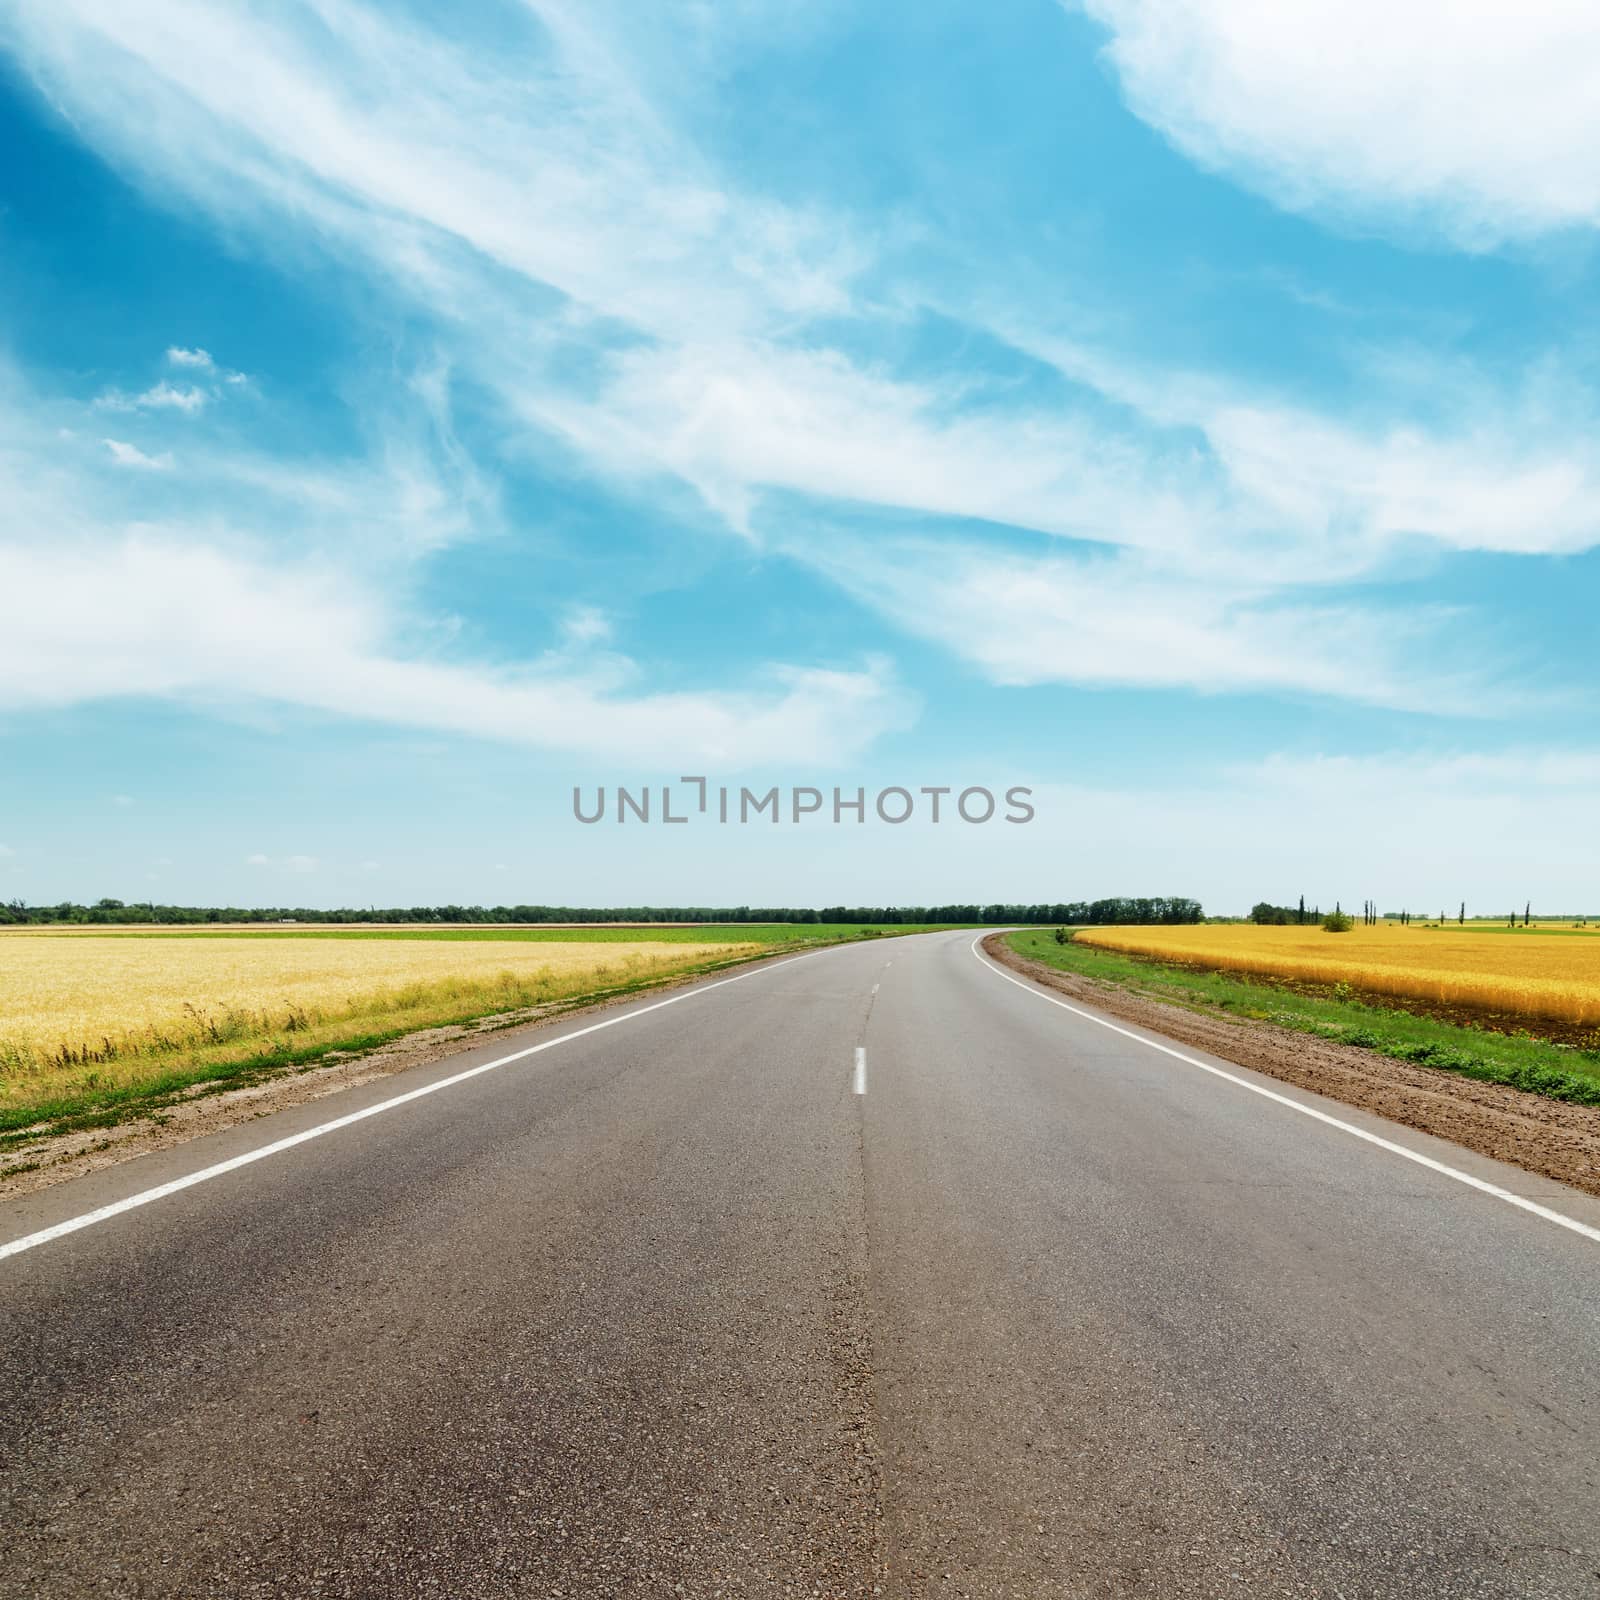 asphalt road to horizon between golden fields under blue sky with clouds